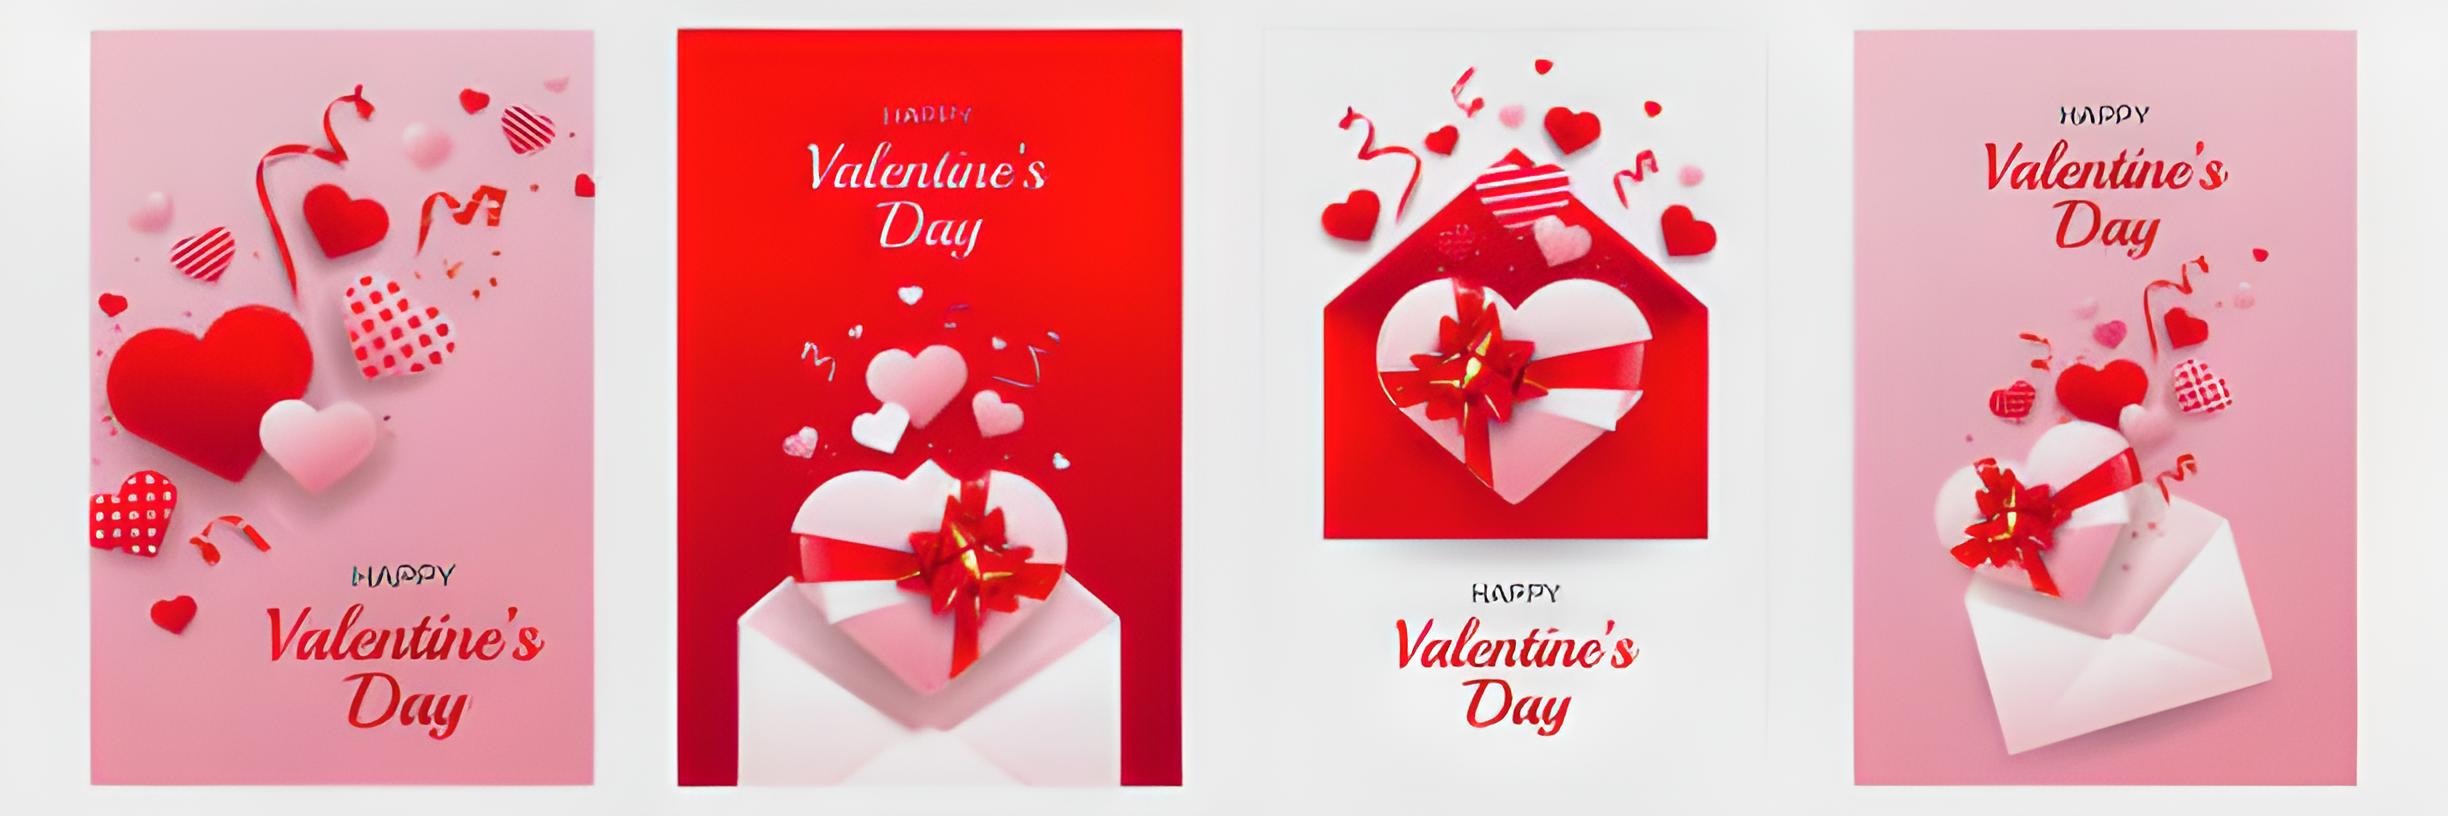 Valentines Day Email Design ideas